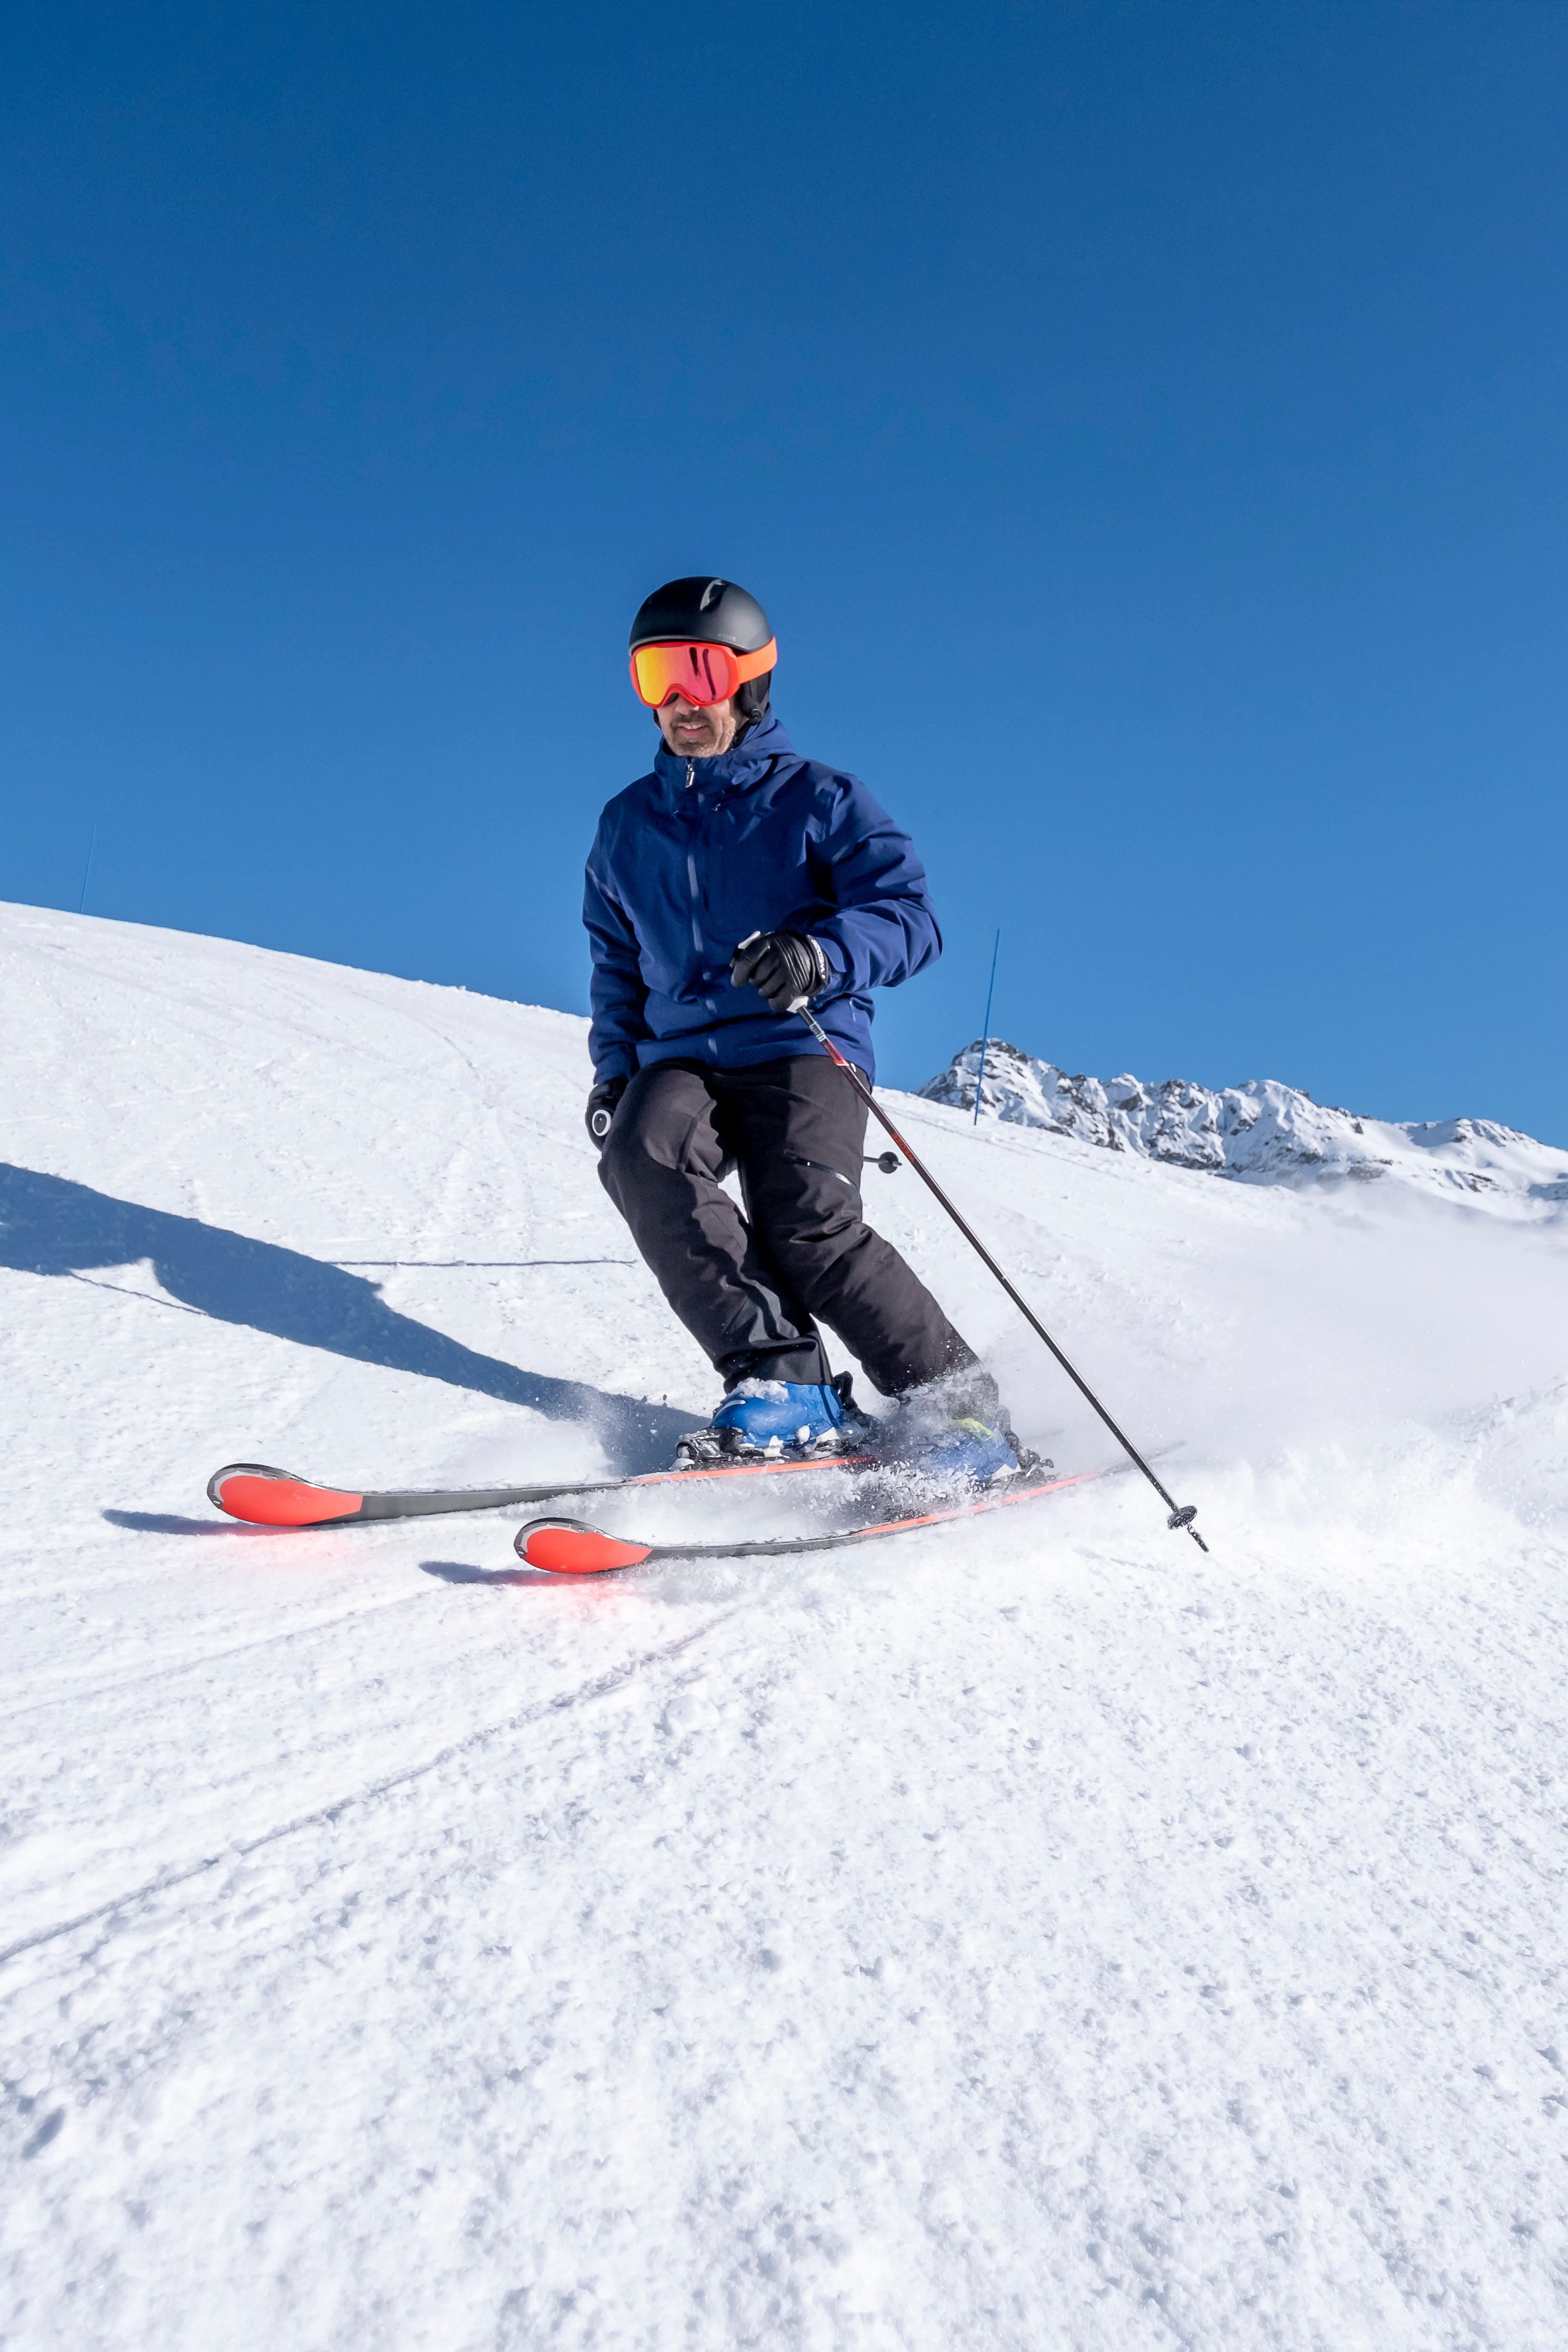 Skis alpins avec fixations homme – Cross 550+ noir - WEDZE